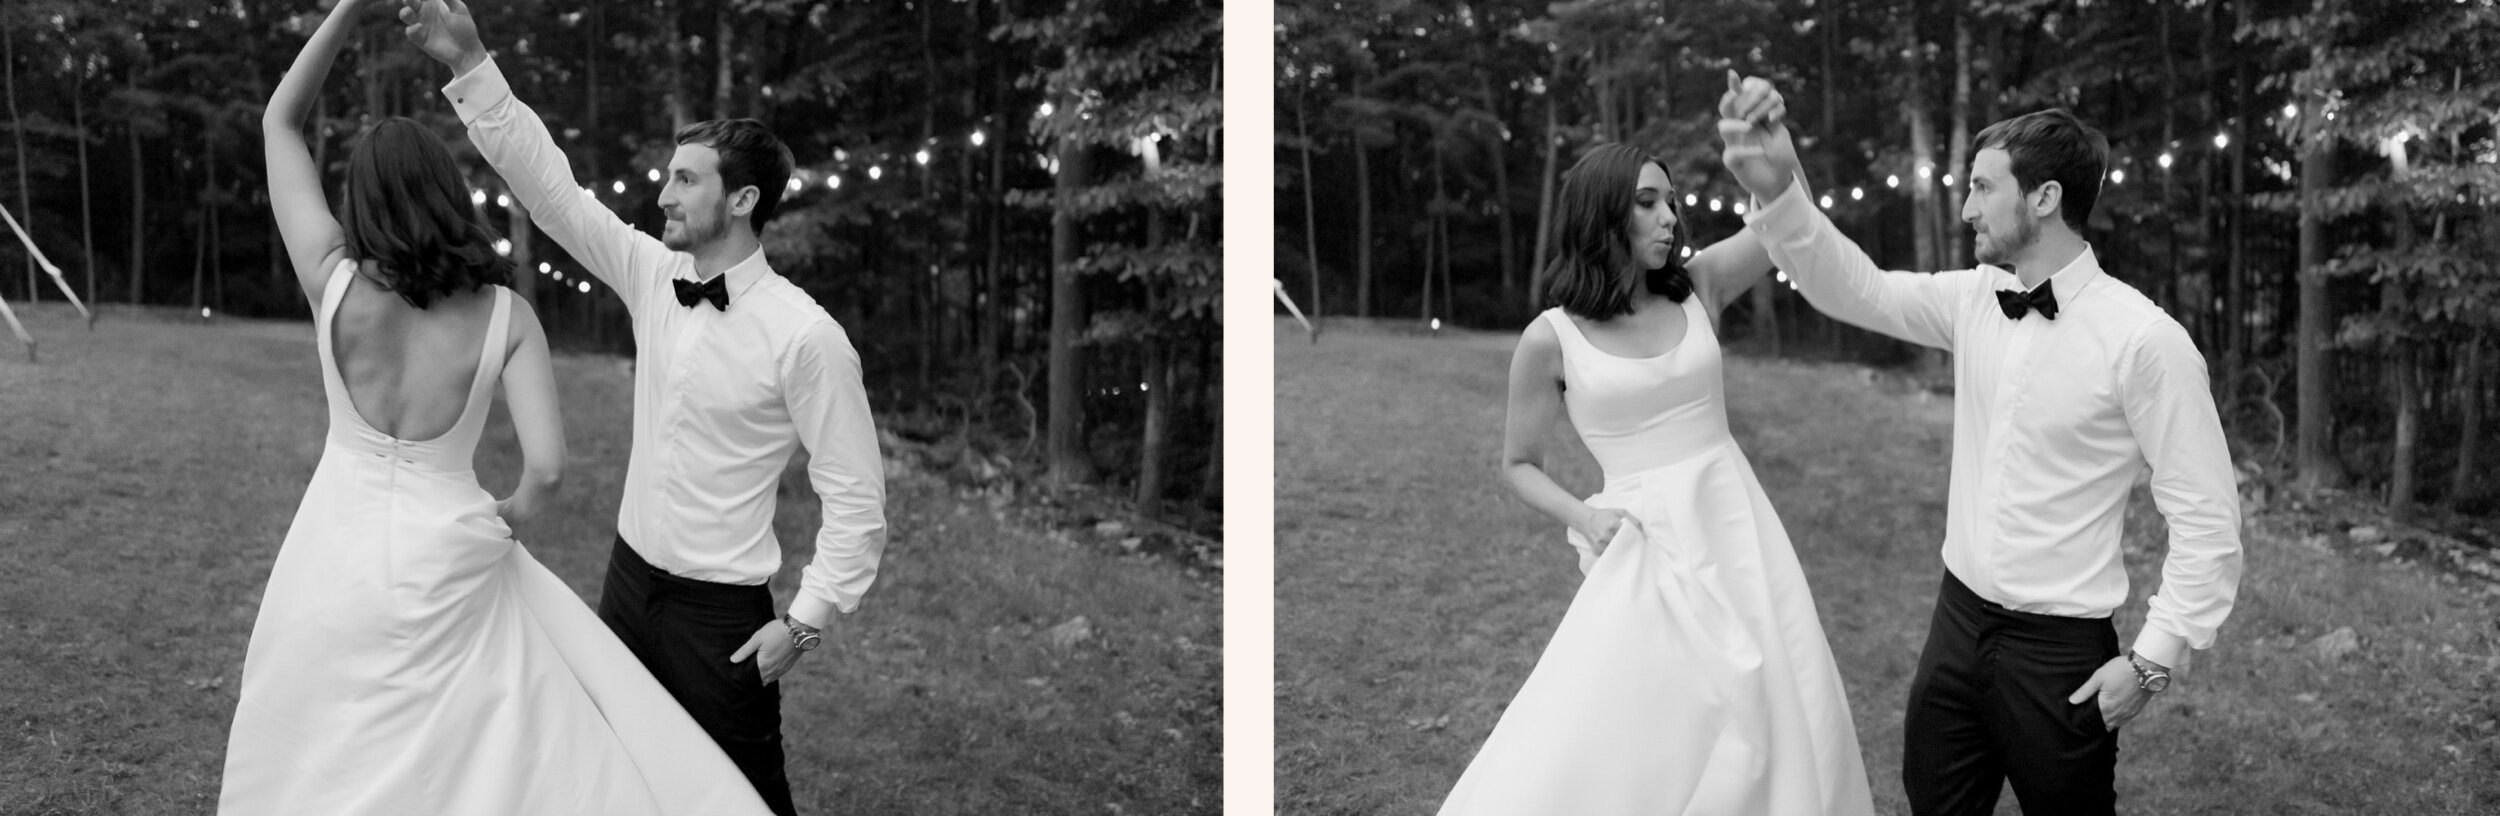 Corina & Jesse - Upstate NY Wedding 0055.jpg